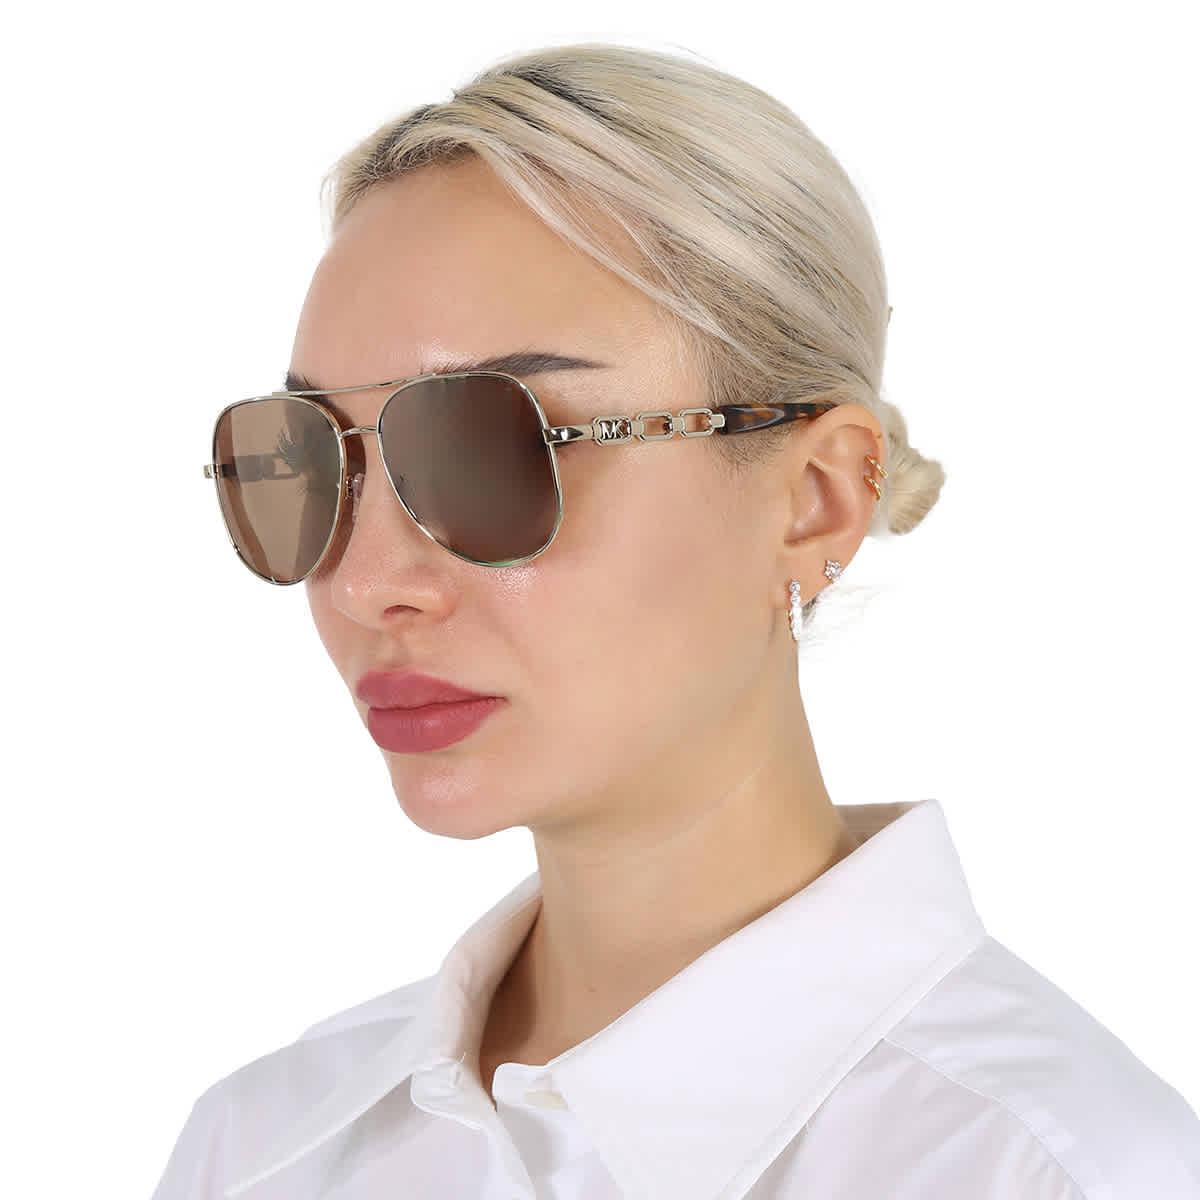 Michael Kors Chianti 58mm Aviator Sunglasses Product Image